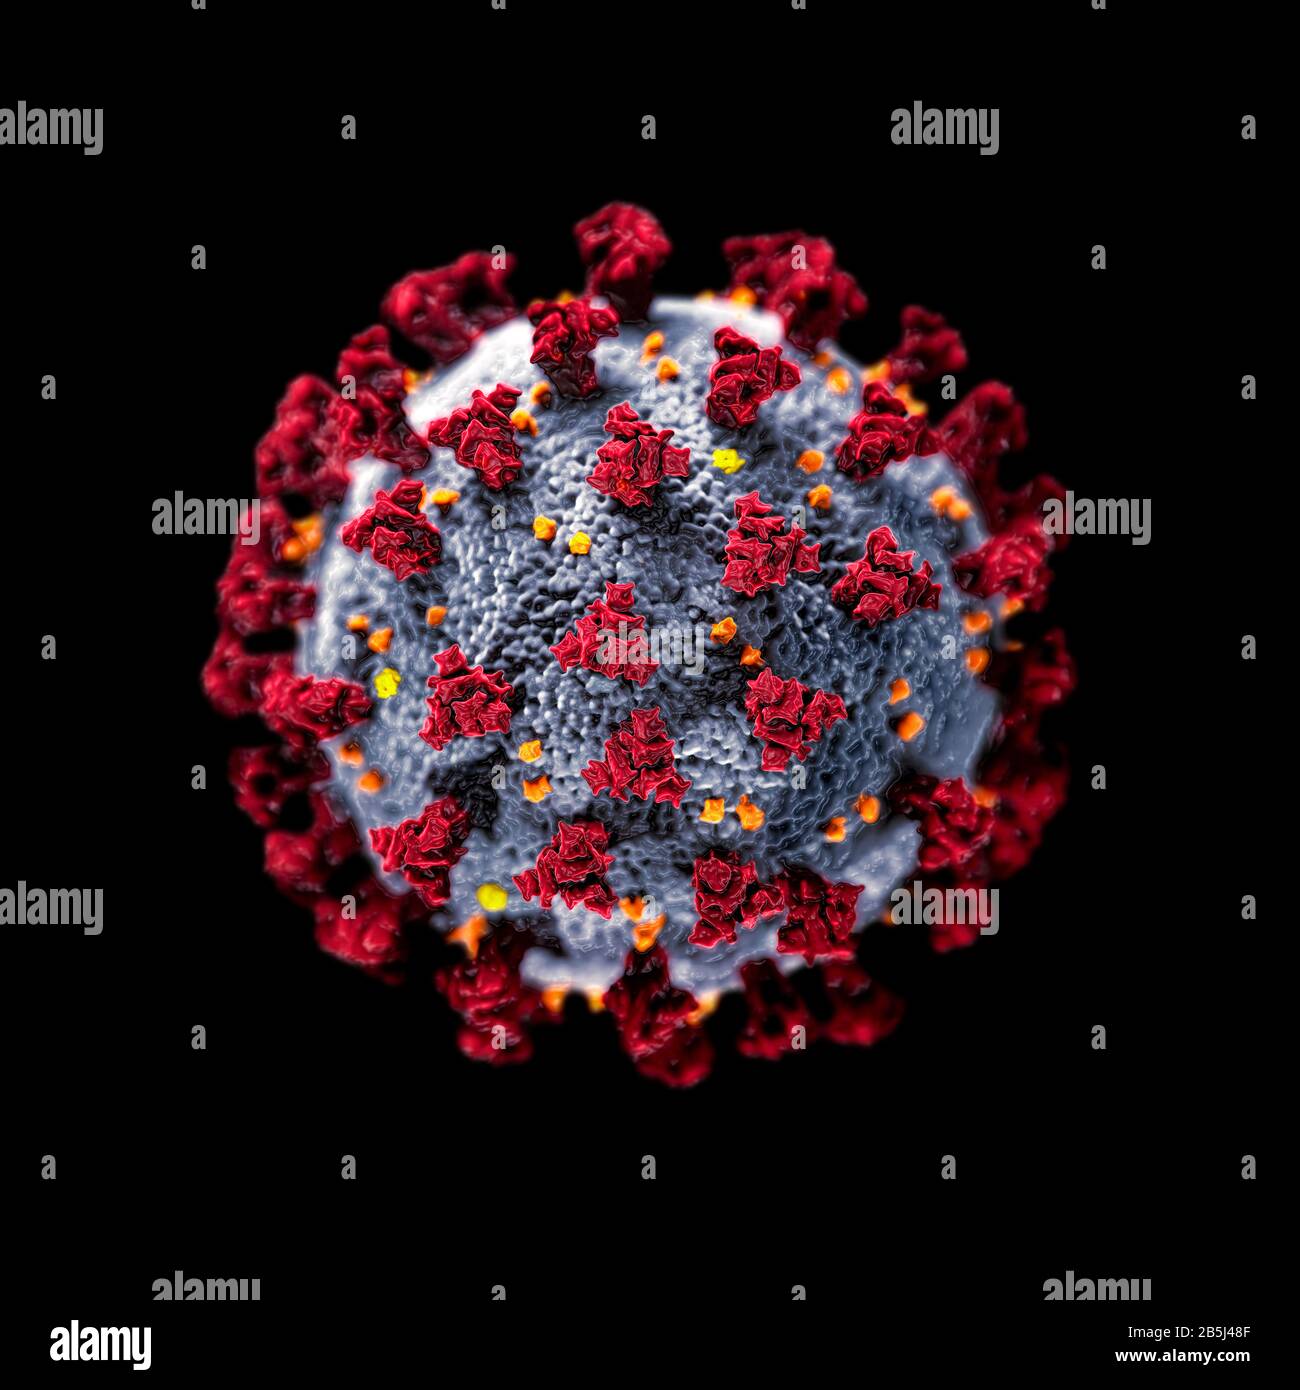 Una representación informática del virus SARS-CoV-2 sobre fondo negro (Síndrome Respiratorio agudo Severo Coronavirus 2) - COVID 19 partícula de virión. Foto de stock